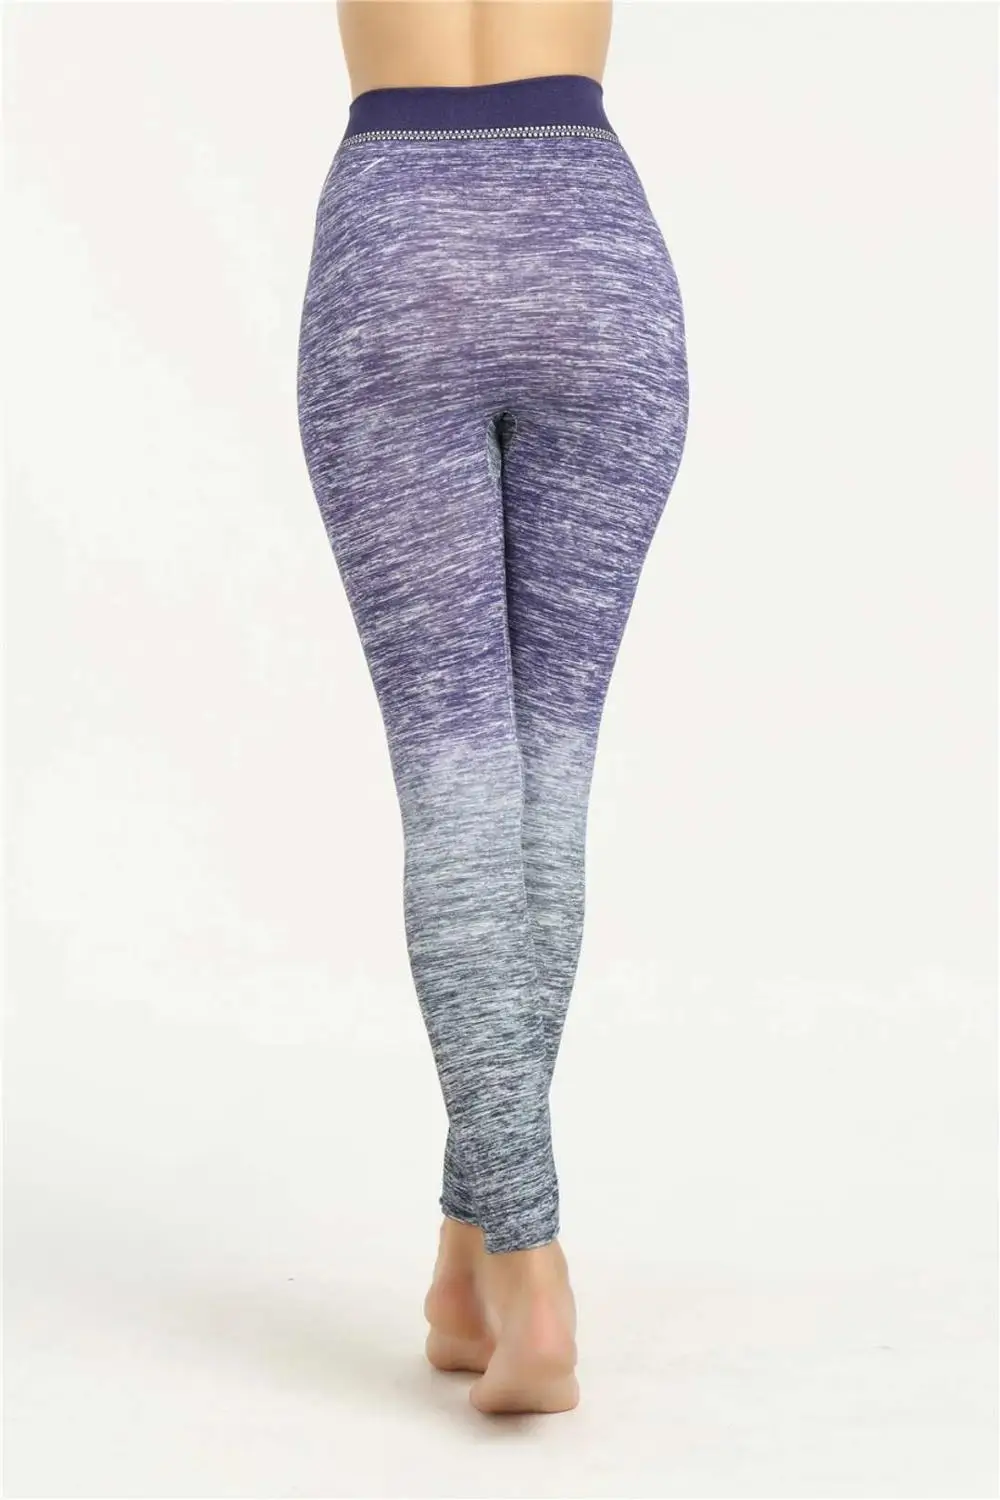 Assun 2018 Yoga Pants Mature Women Legging,High Quality Yoga Pants ...